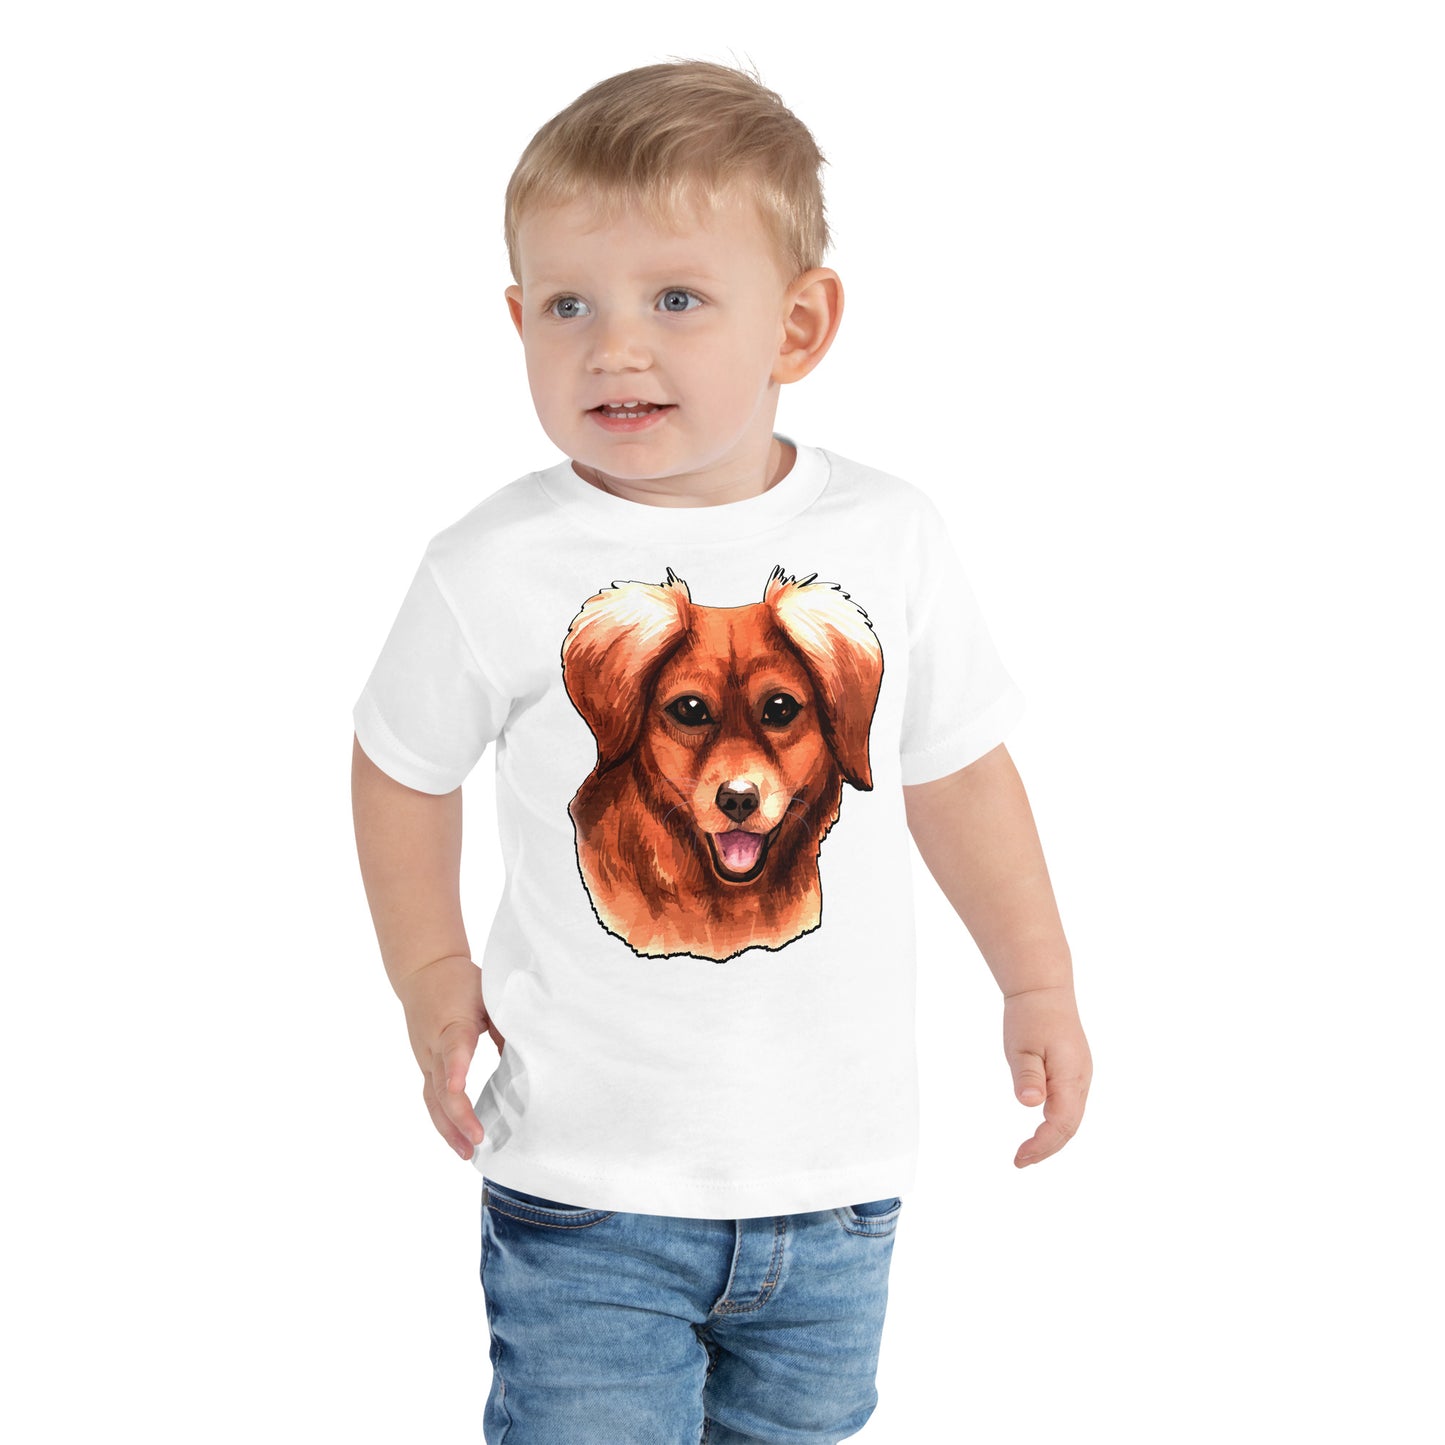 Cool Dog Portrait T-shirt, No. 0576